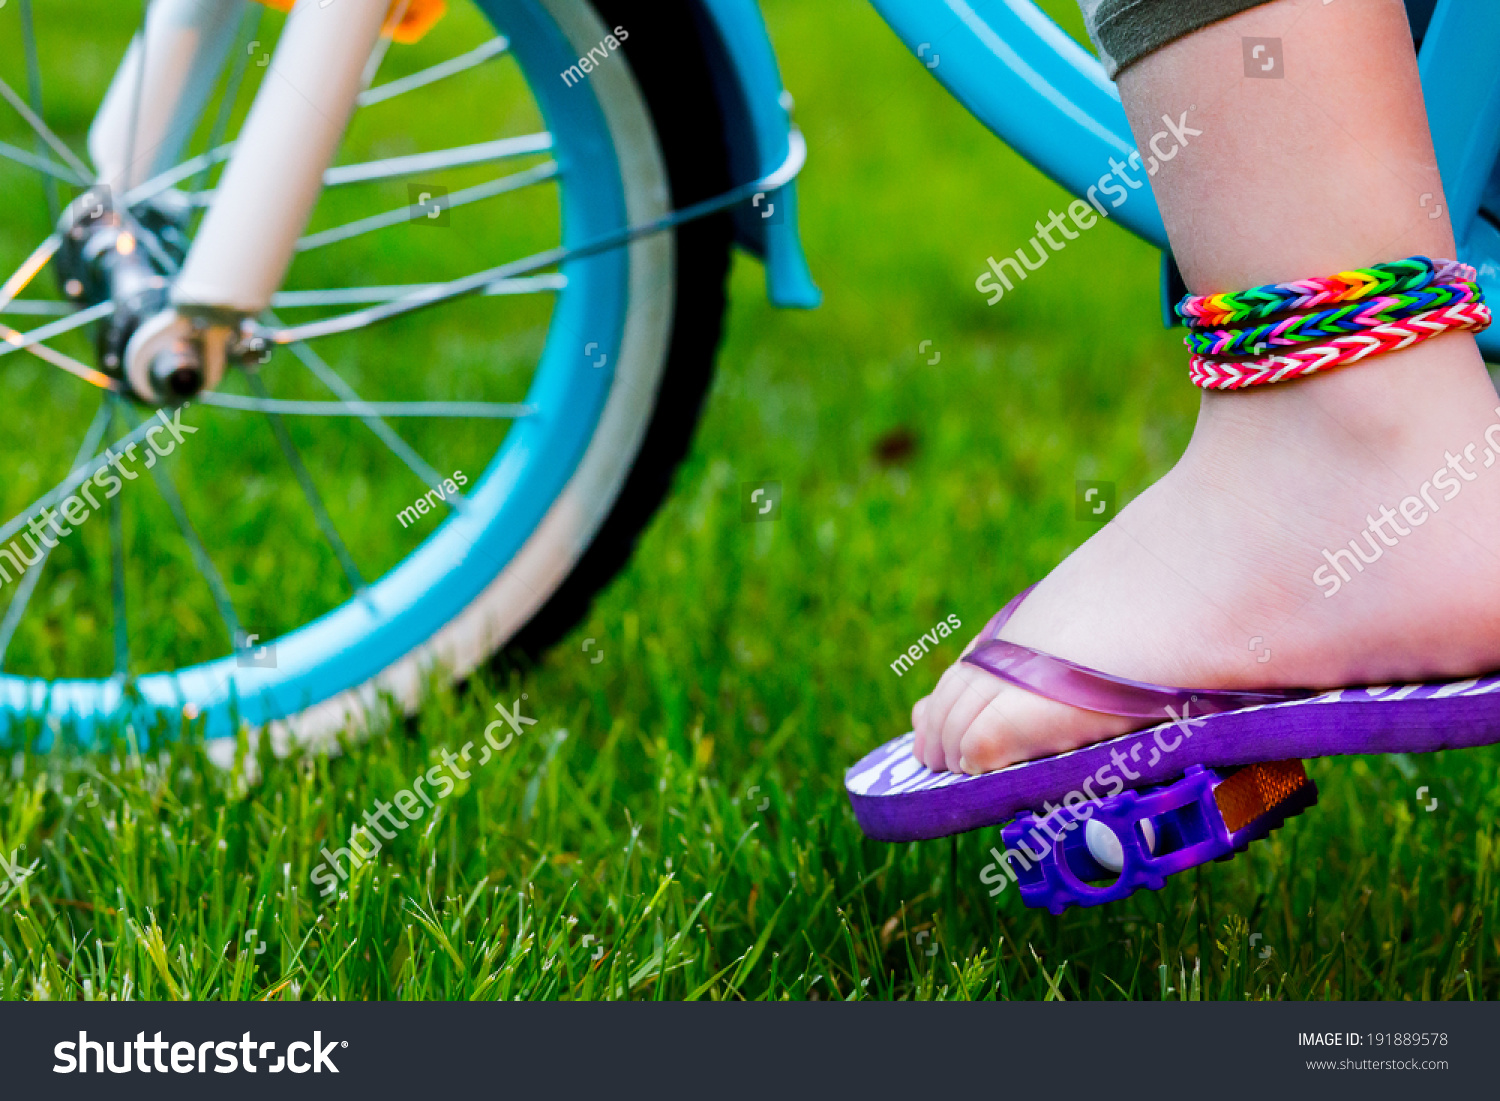 riding bike with flip flops